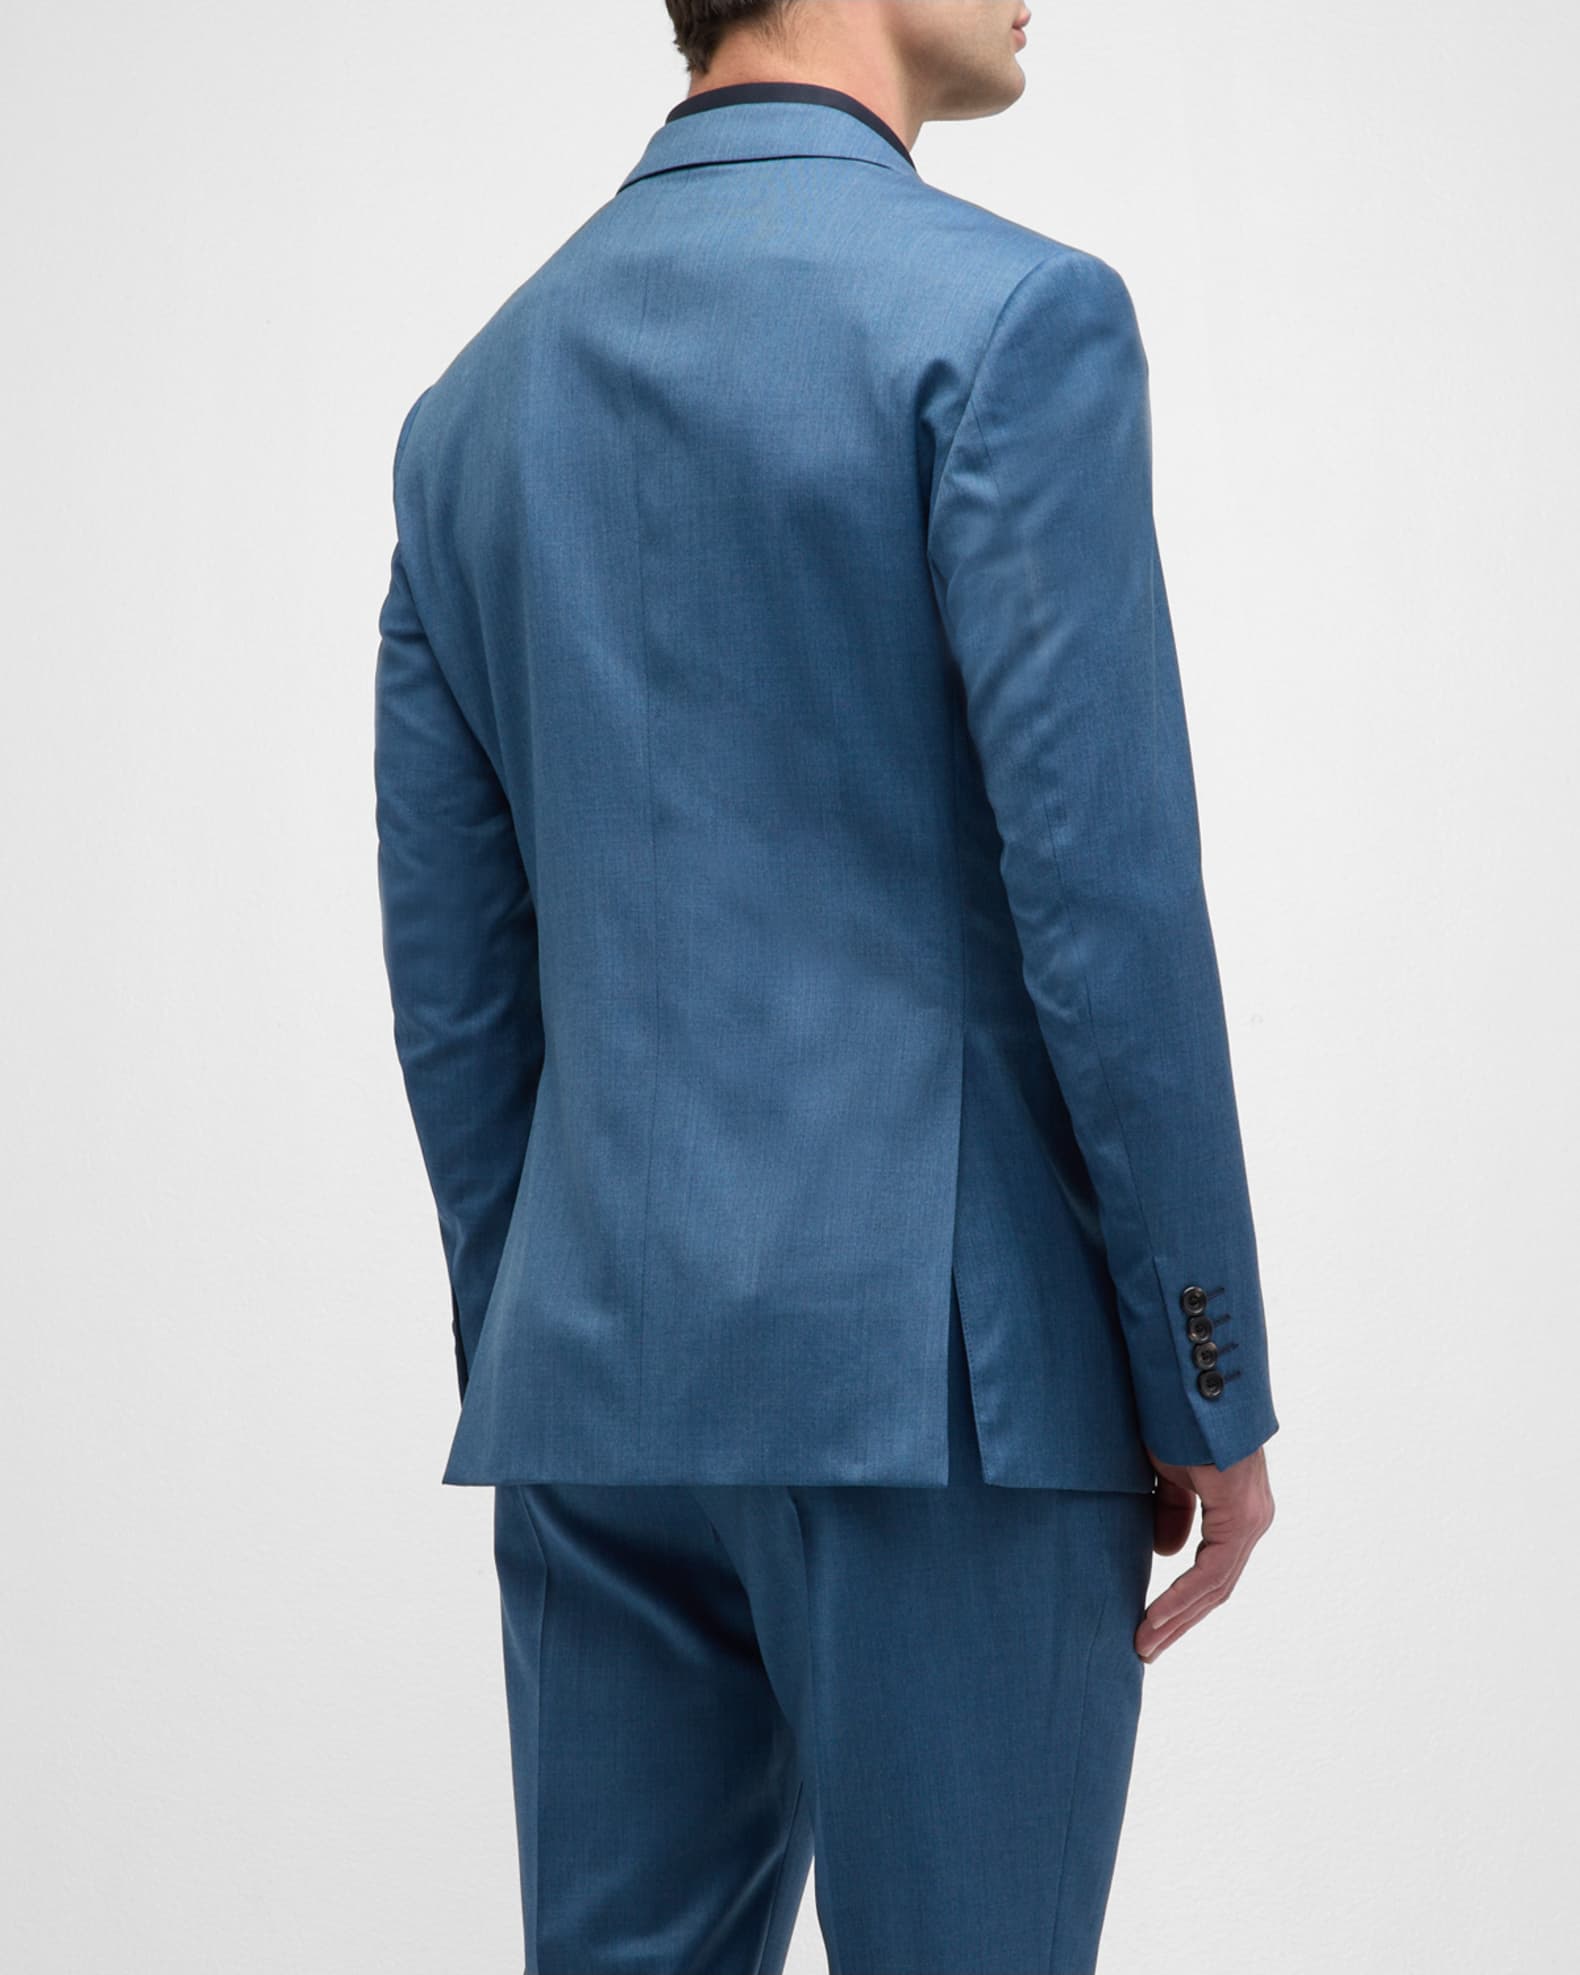 Emporio Armani Men's Solid Wool Suit | Neiman Marcus